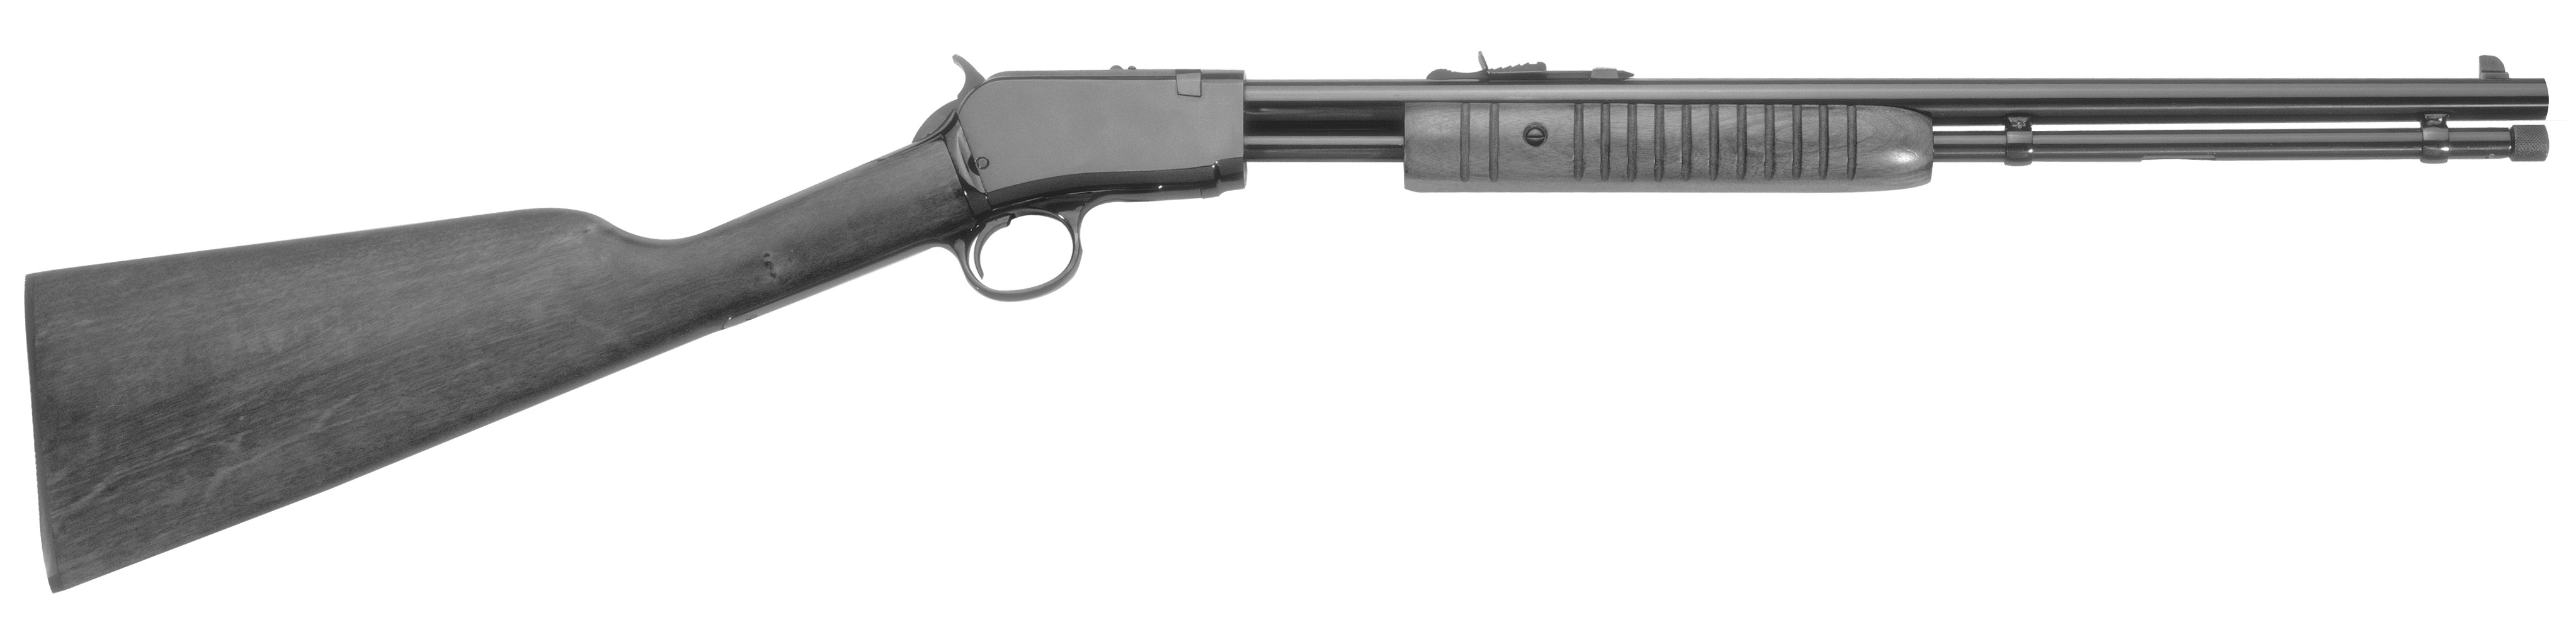 Model 62 Carbine